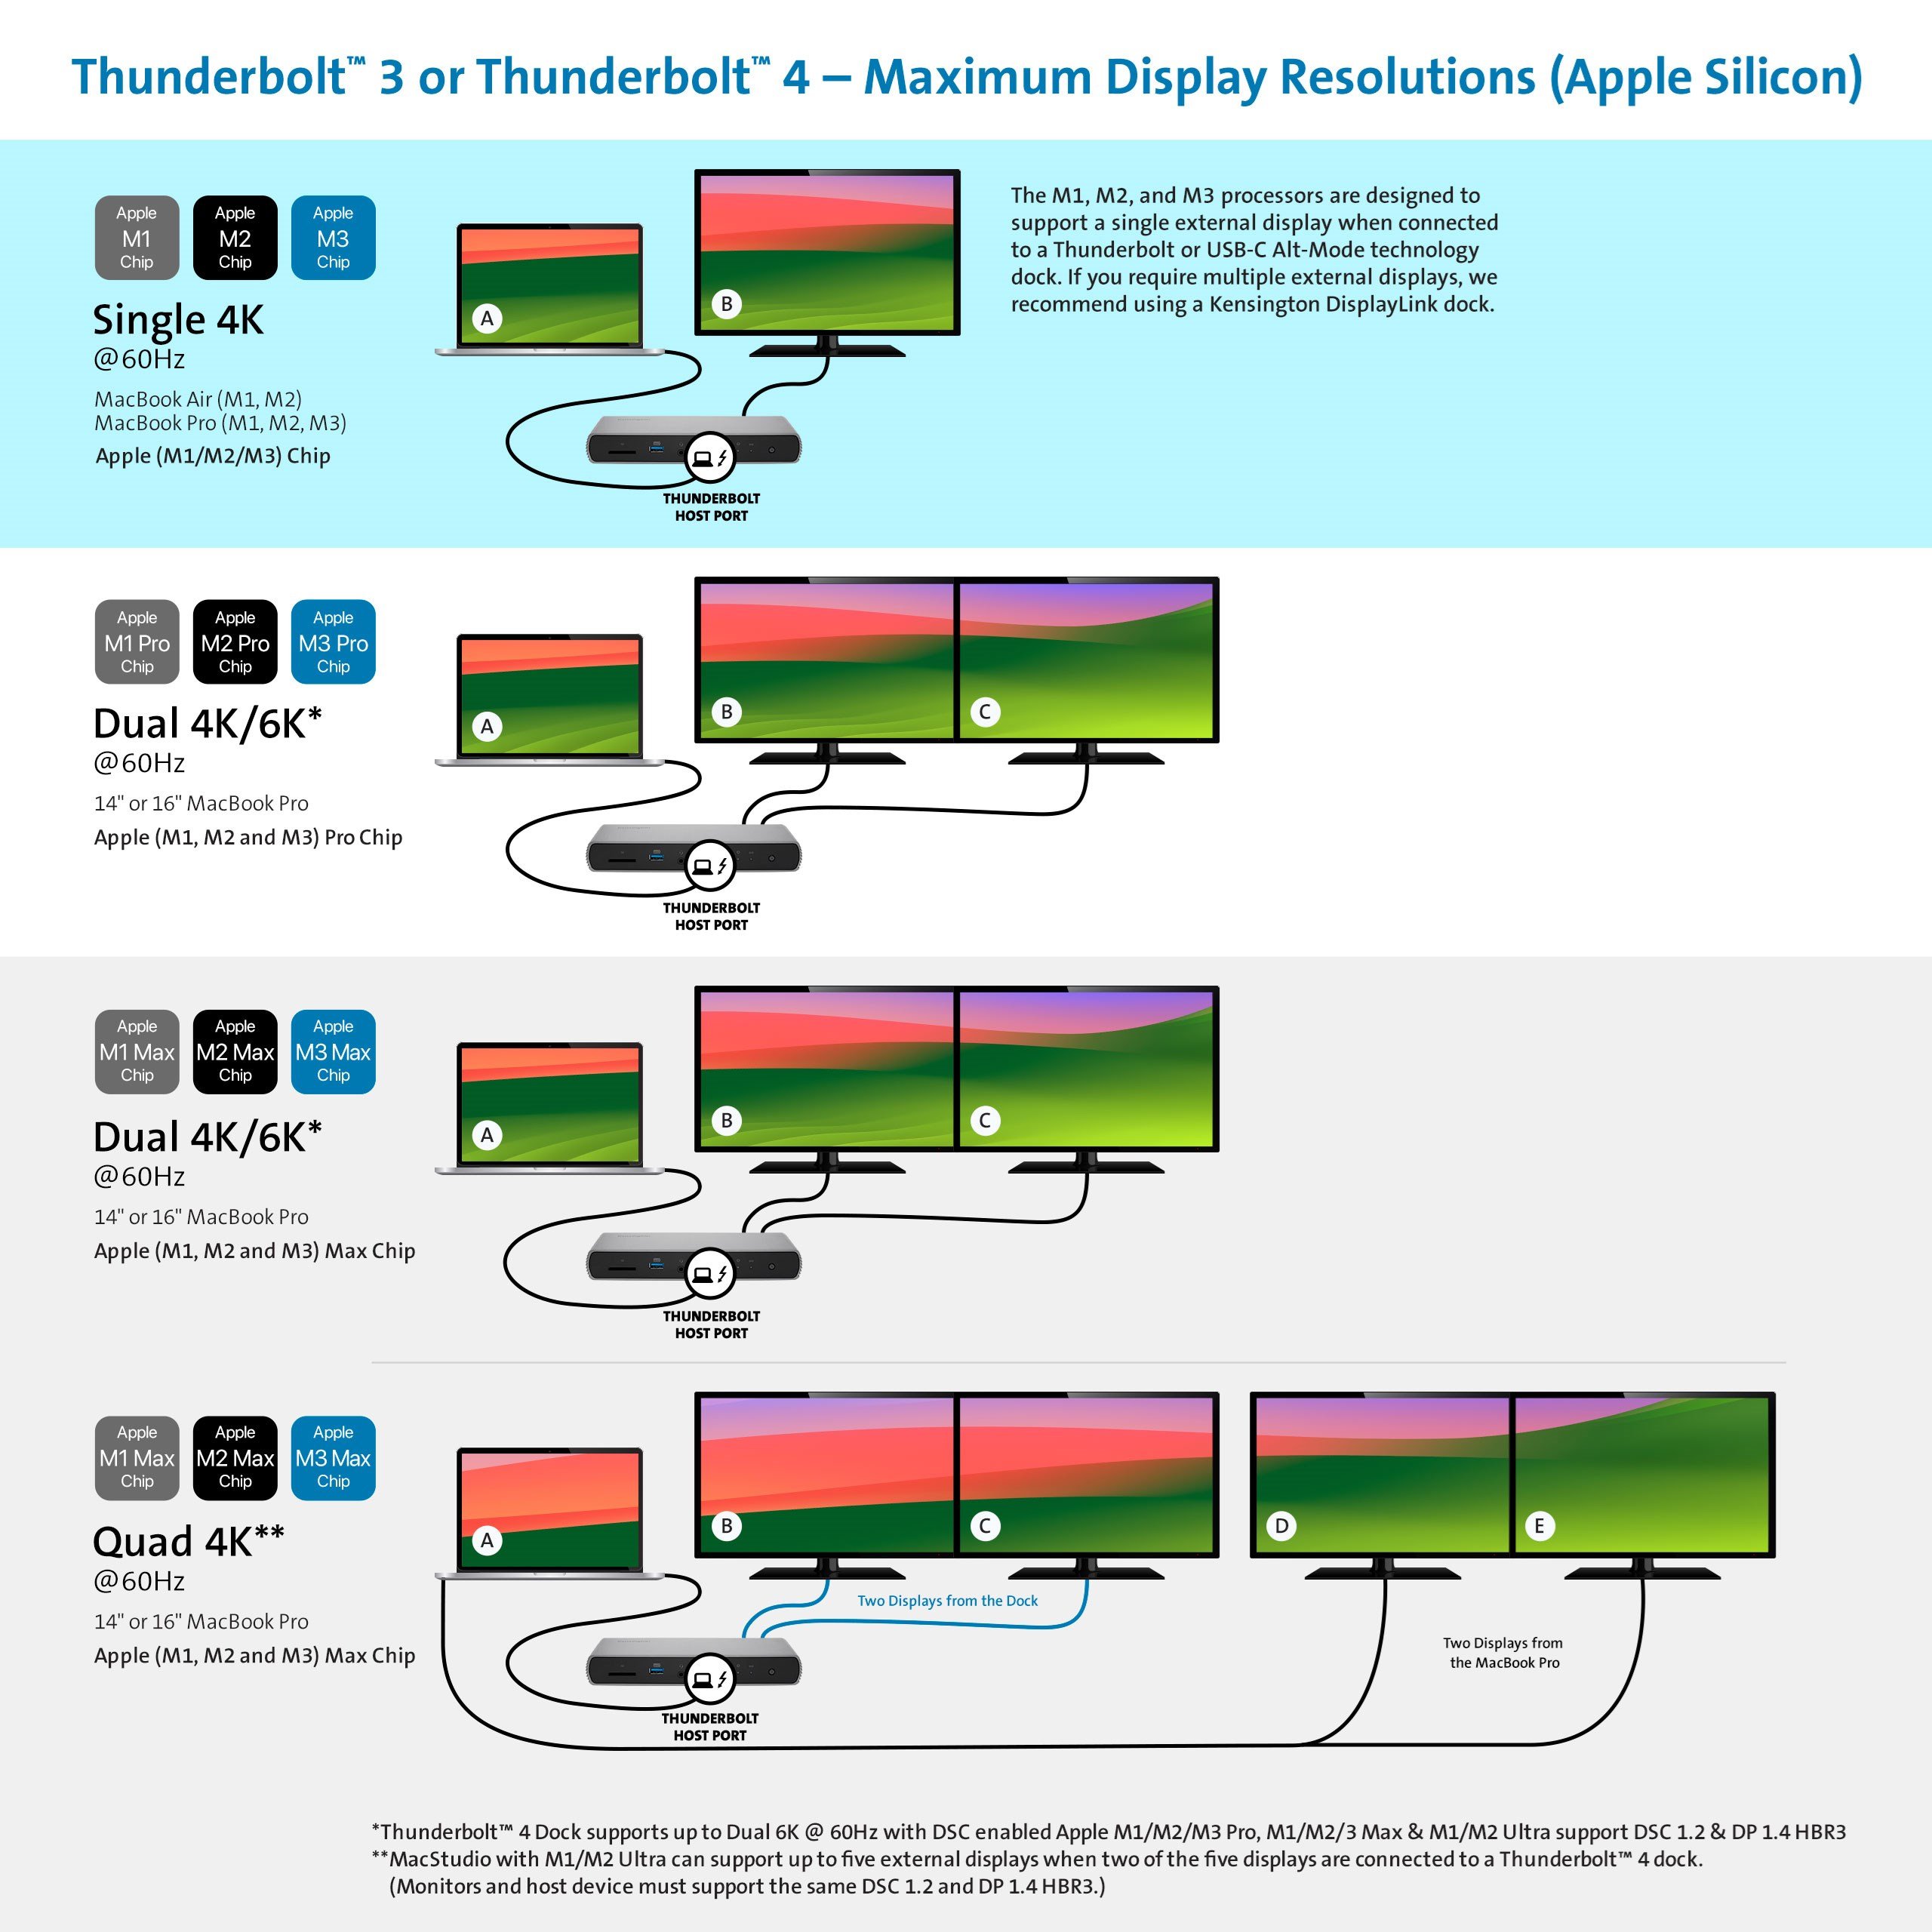 Thunderbolt 3 or Thunderbolt 4 – Maximum Display Resolutions (Apple Silicon) M1/M2/M3.